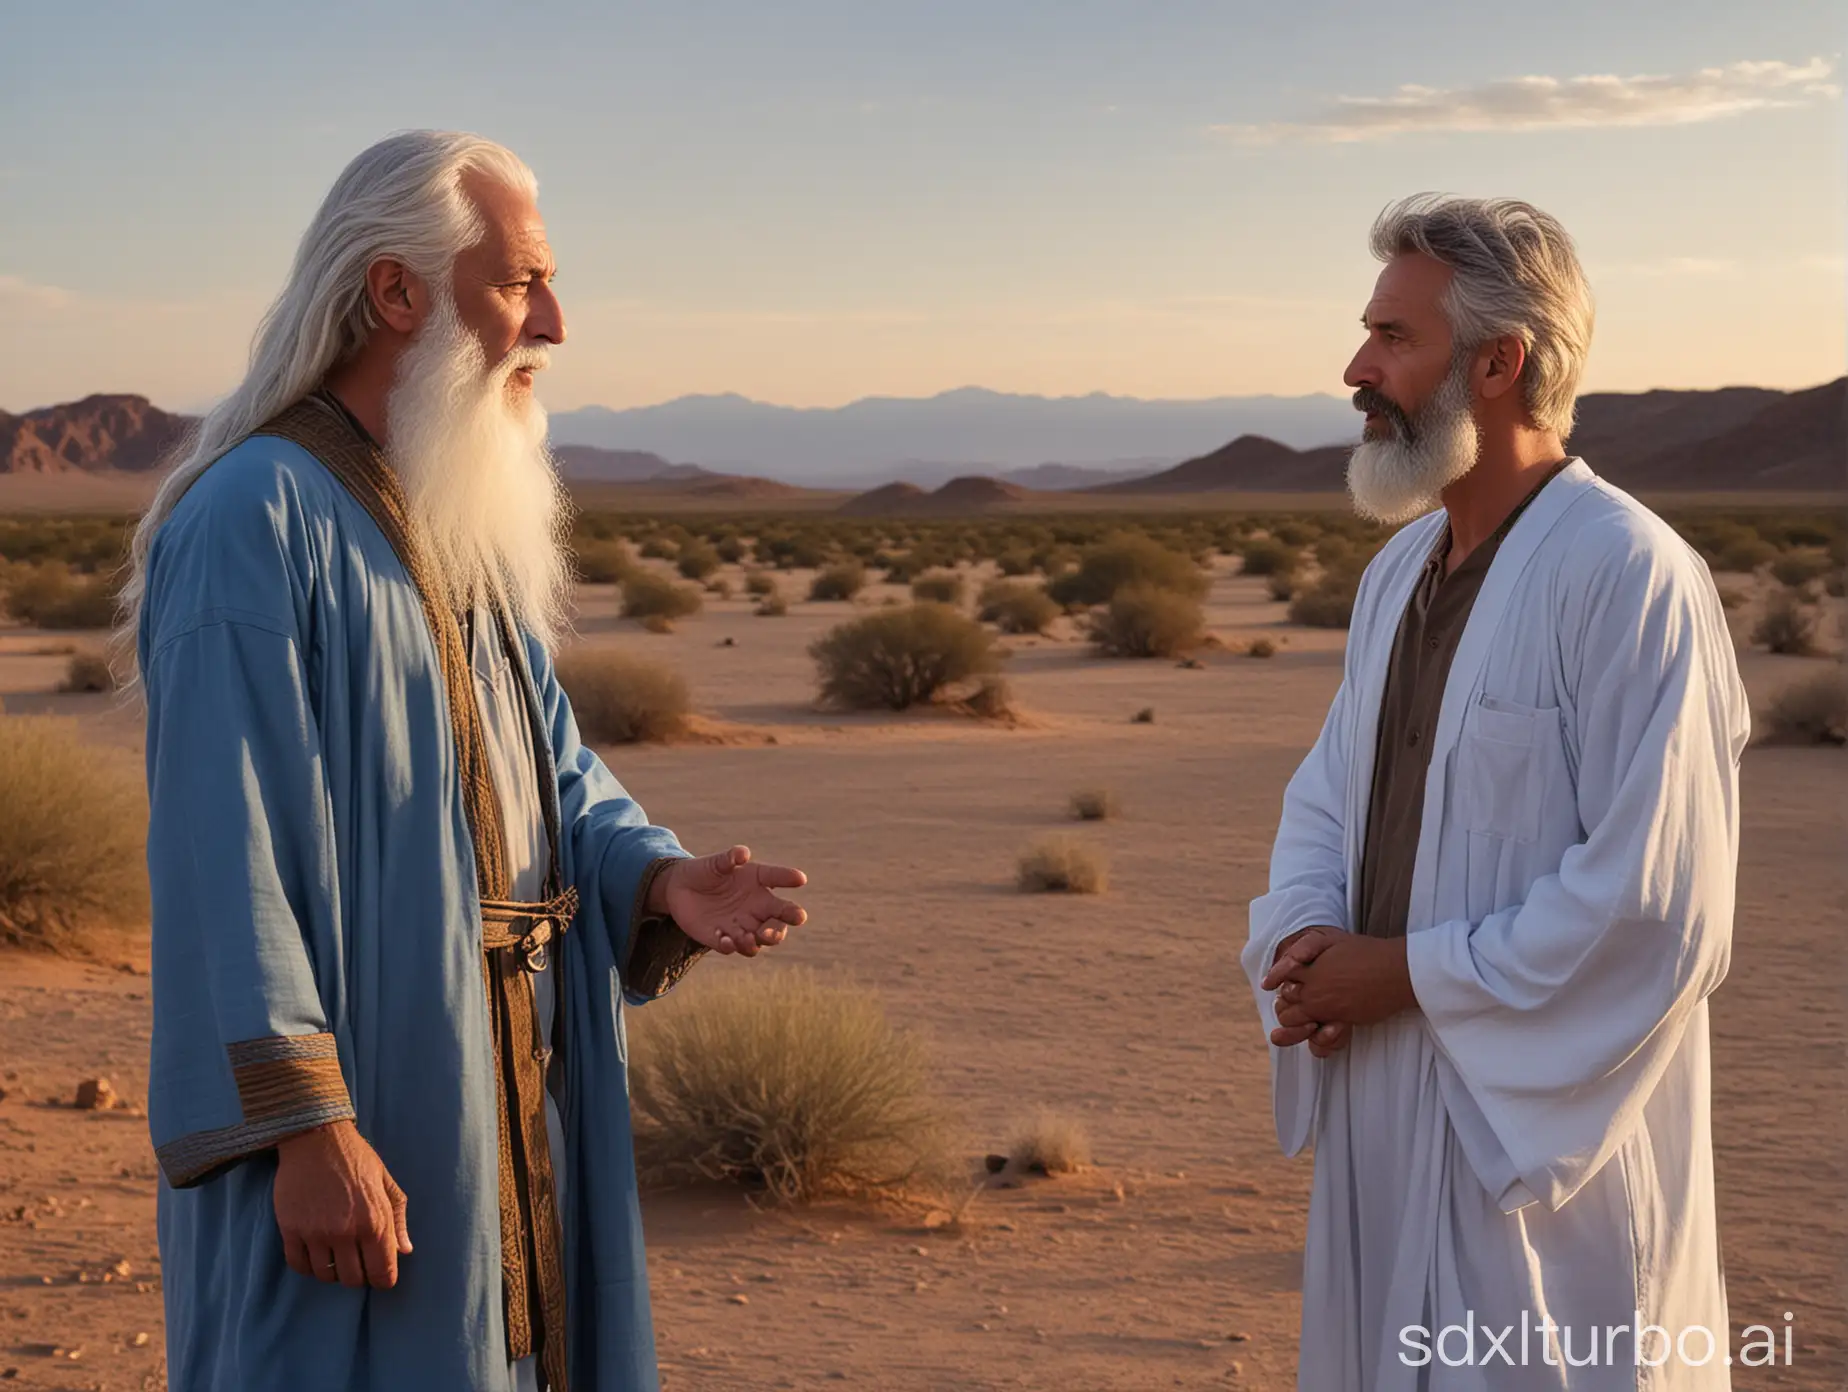 Desert-Sunset-Dialogue-Between-Religious-Elder-and-Young-Traveler